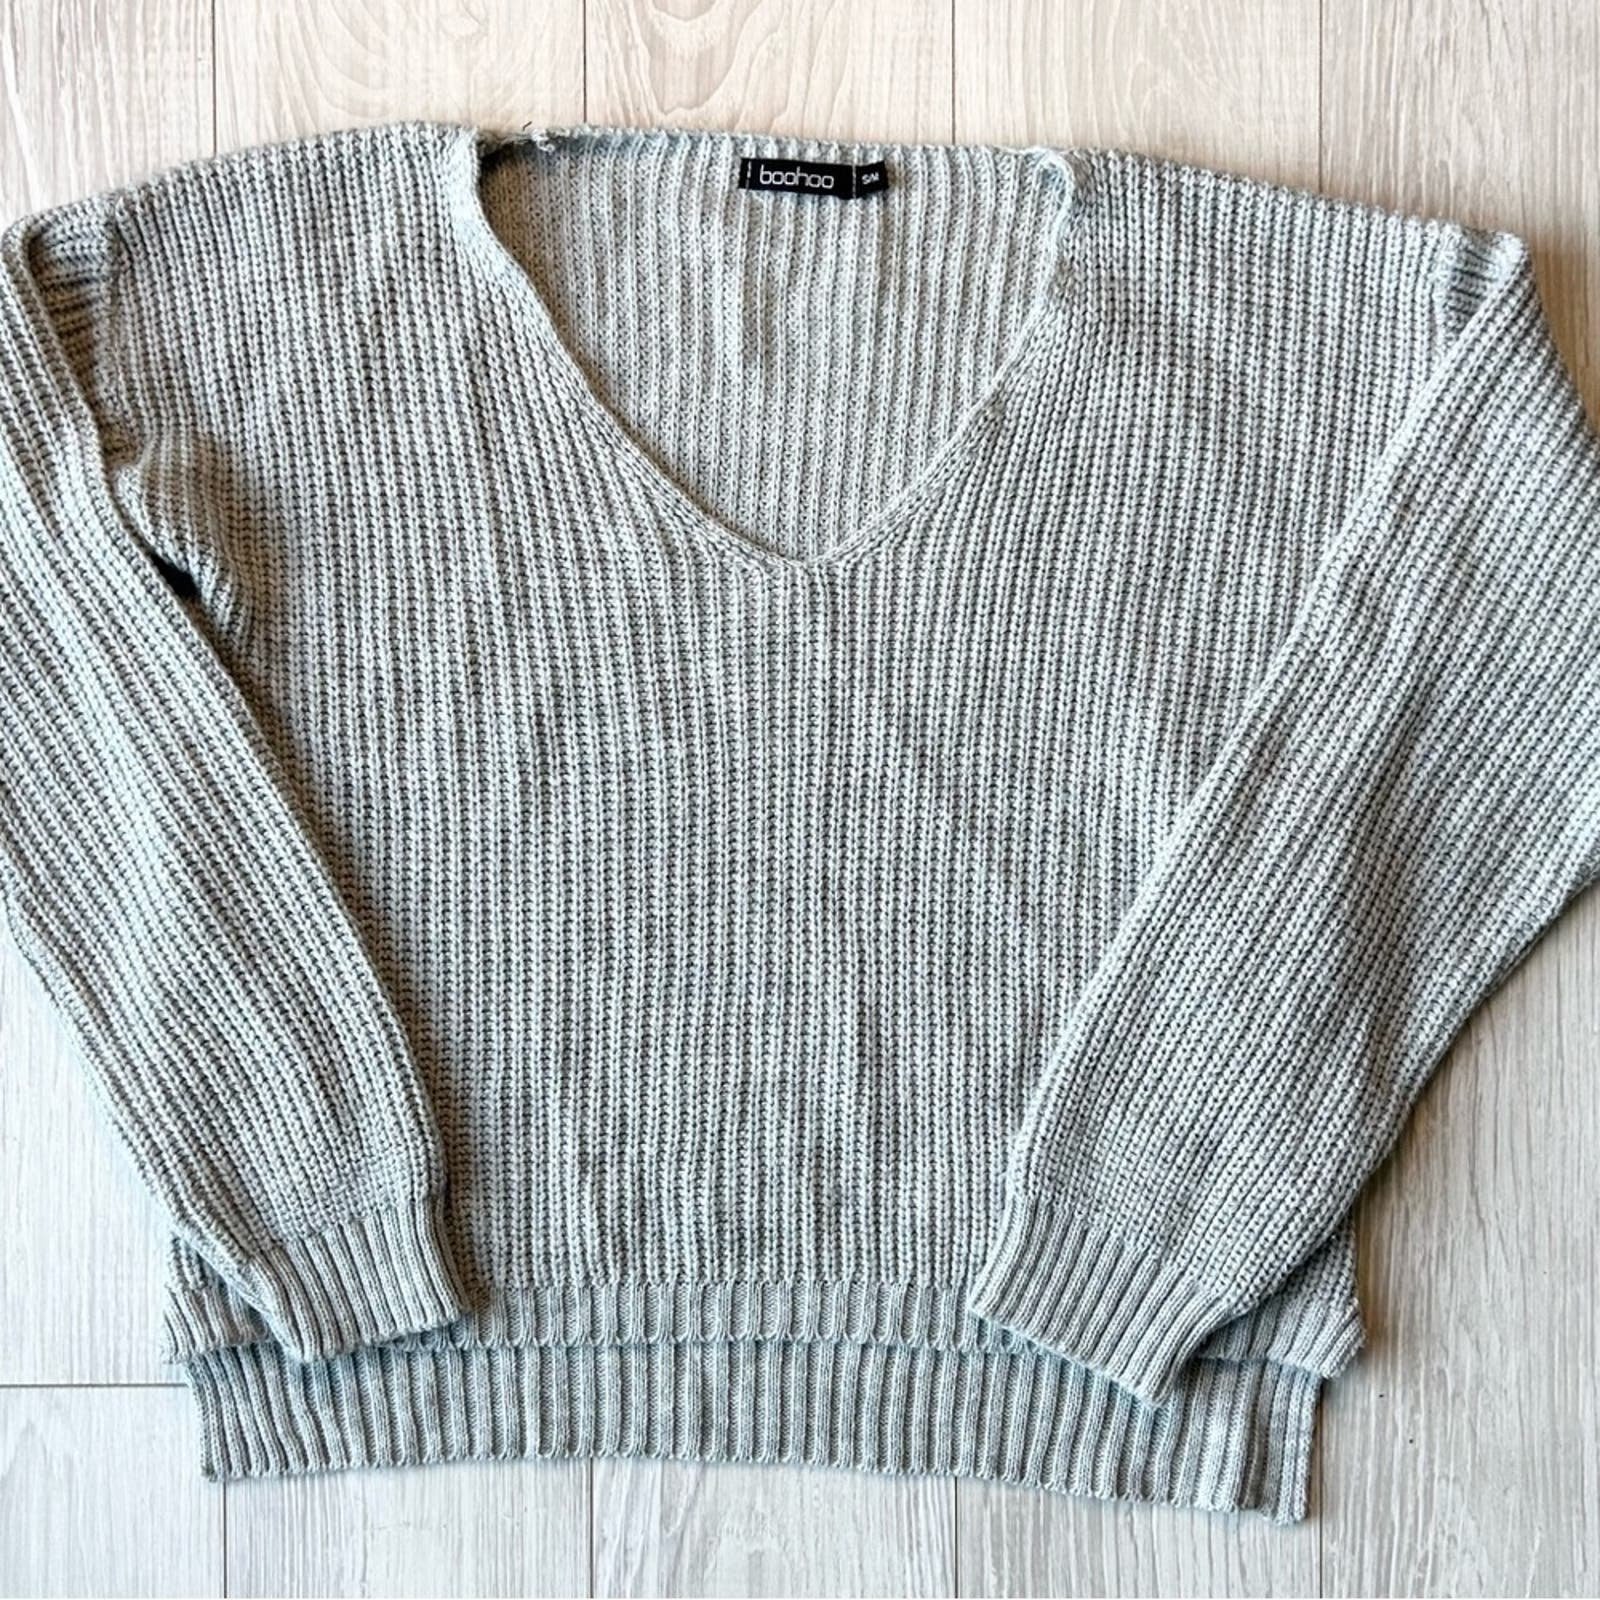 Great Boohoo Gray Knit Sweater Size S/M Ge7aGfMqH Buyin